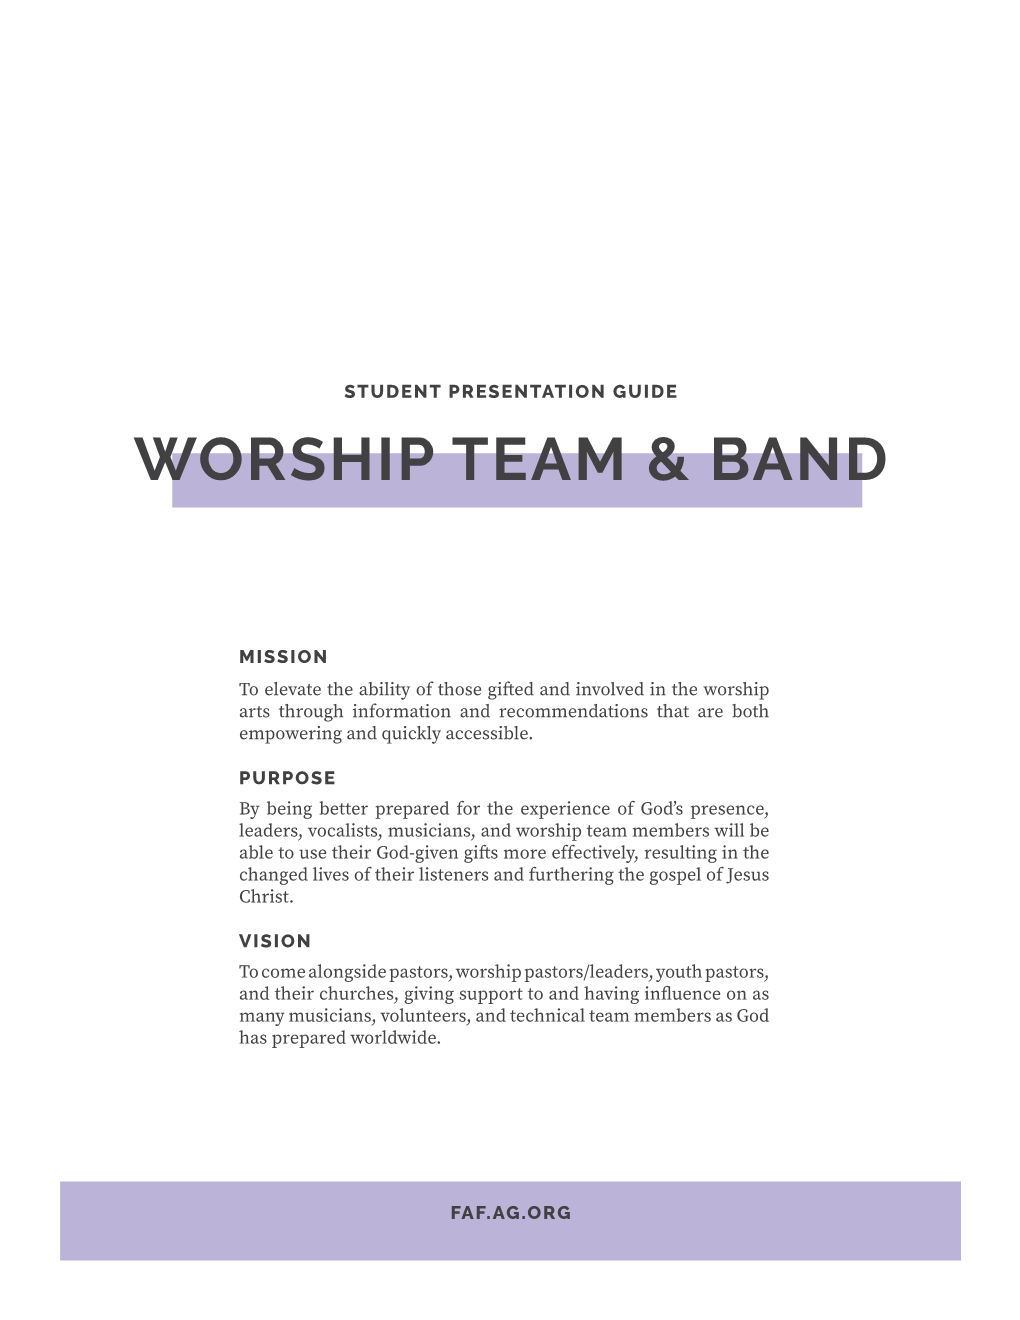 Worship Team & Band